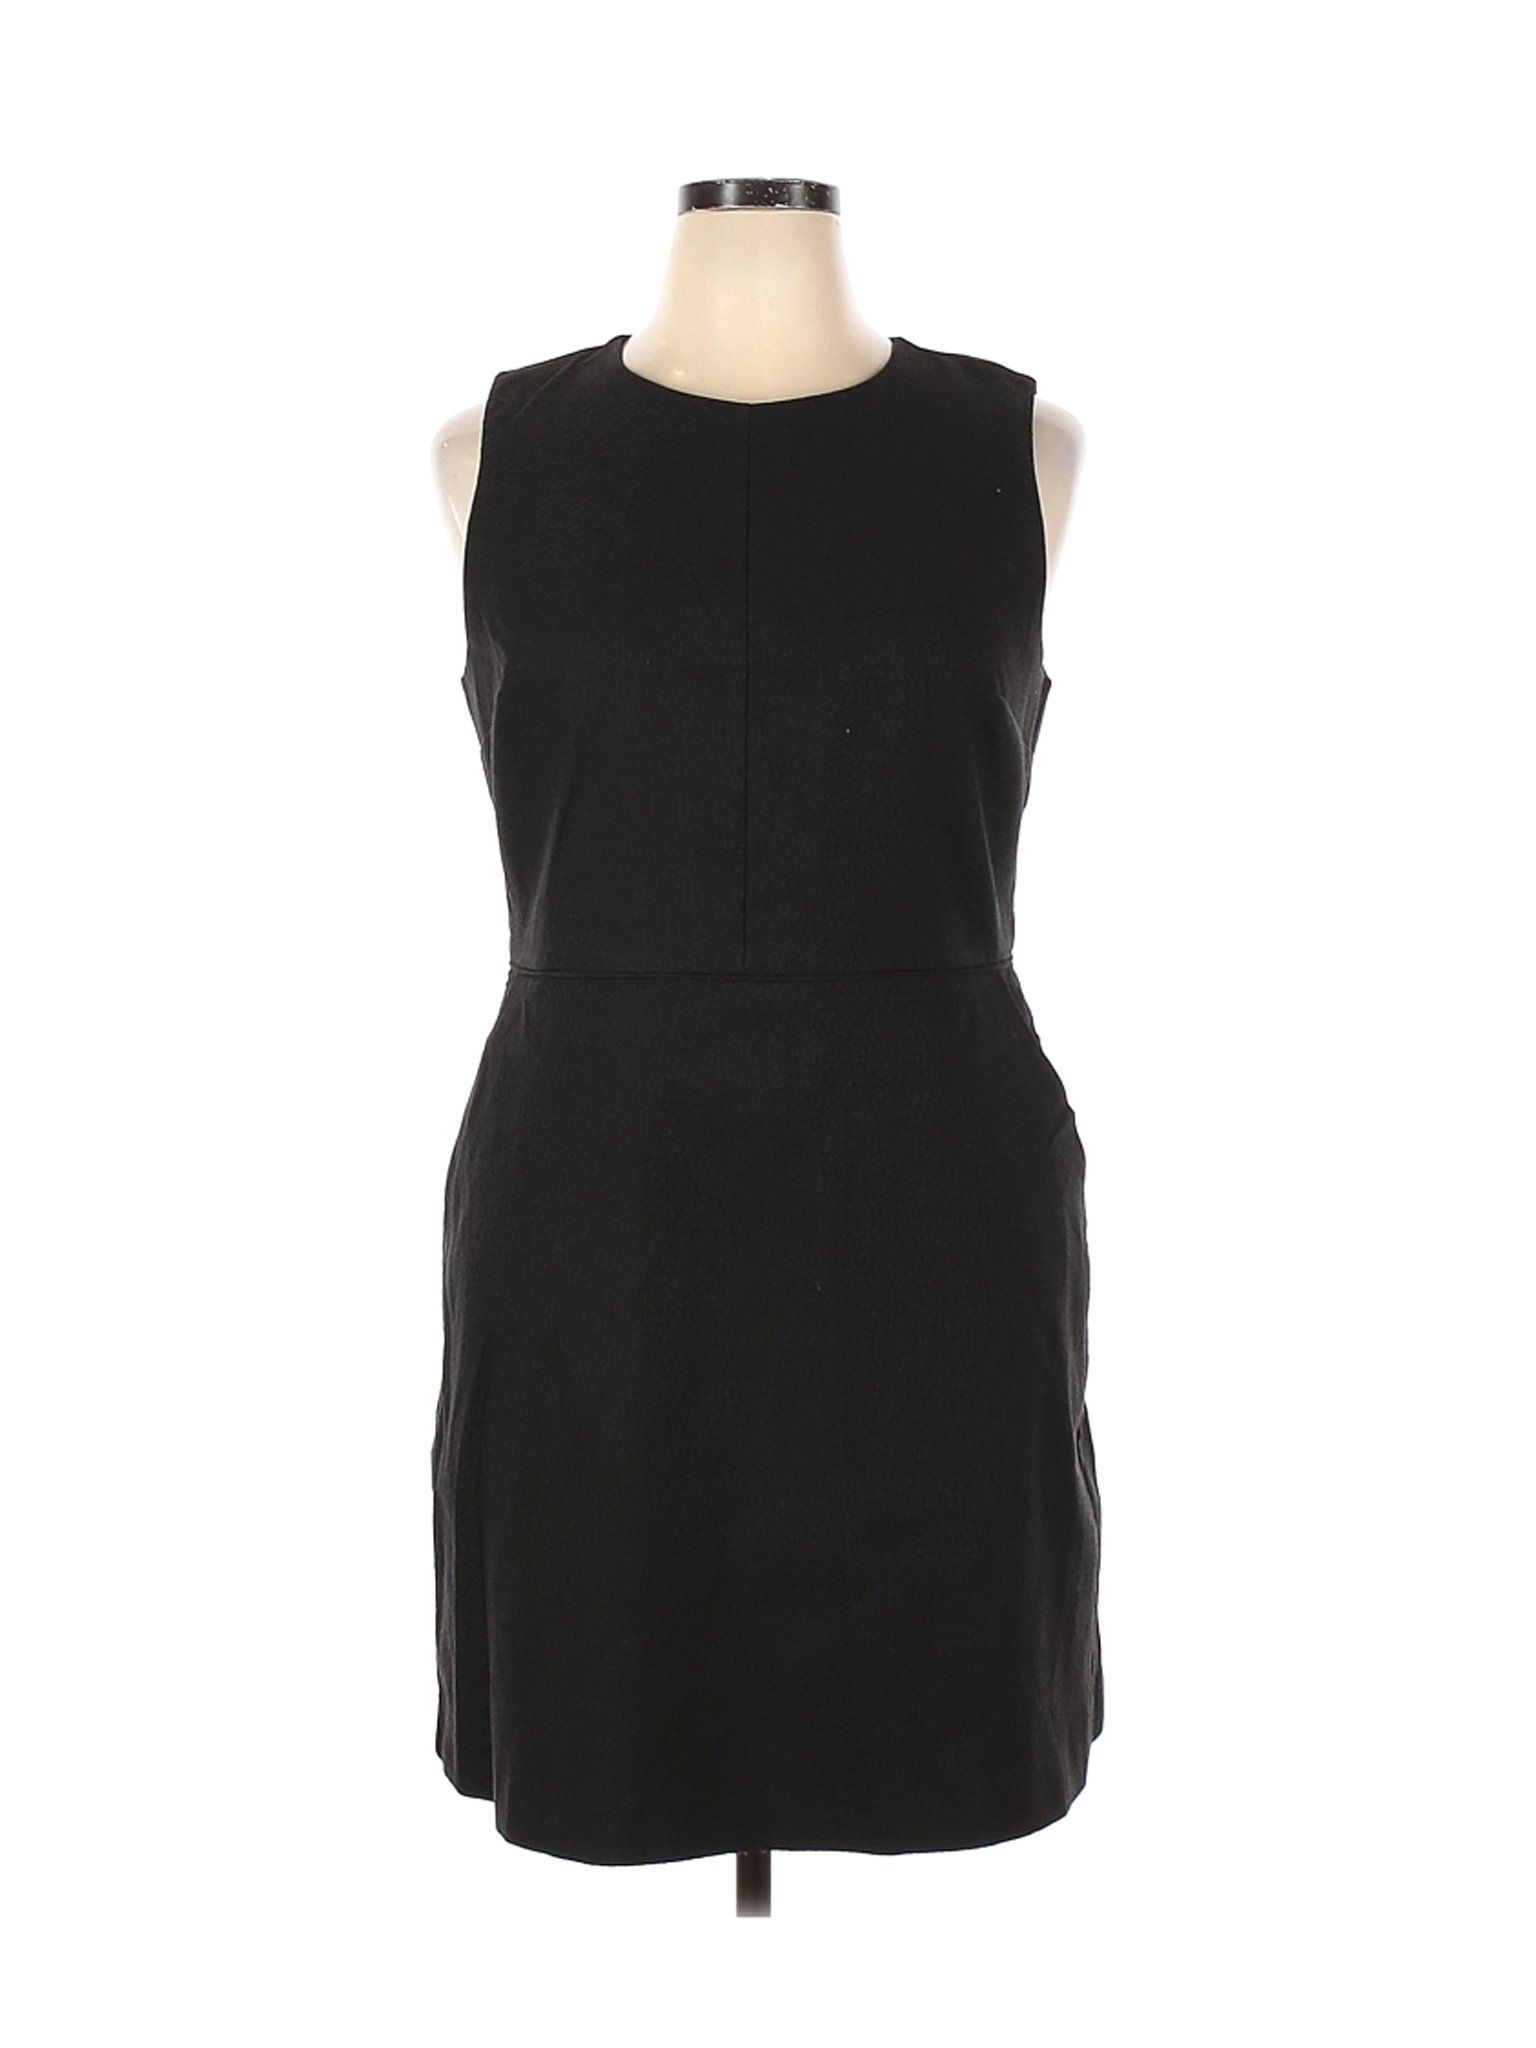 Gap Women Black Casual Dress 16 | eBay